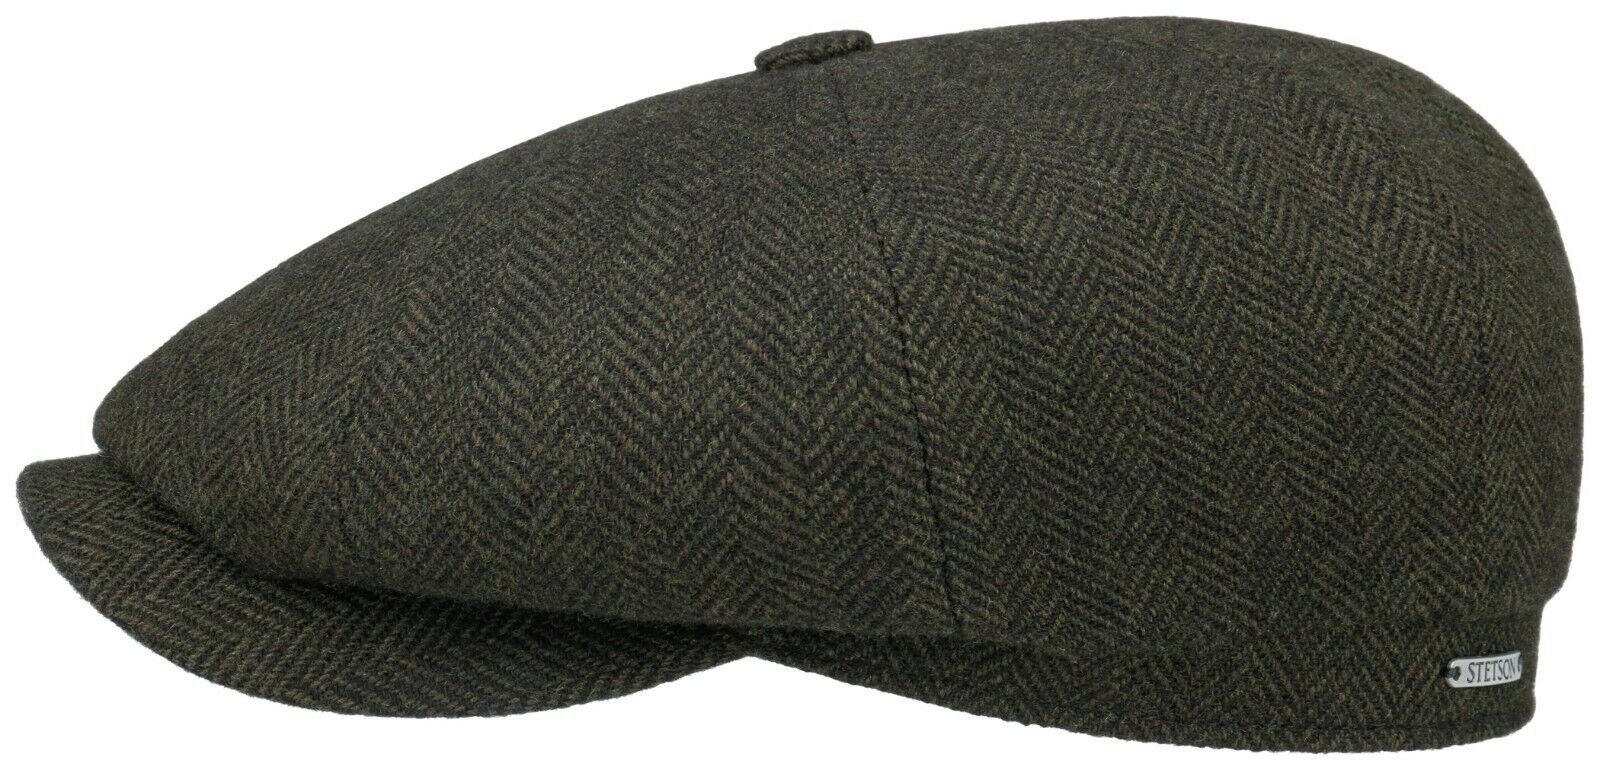 Stetson Ballonmütze Hatteras Classic Wool aus Wolle Grün